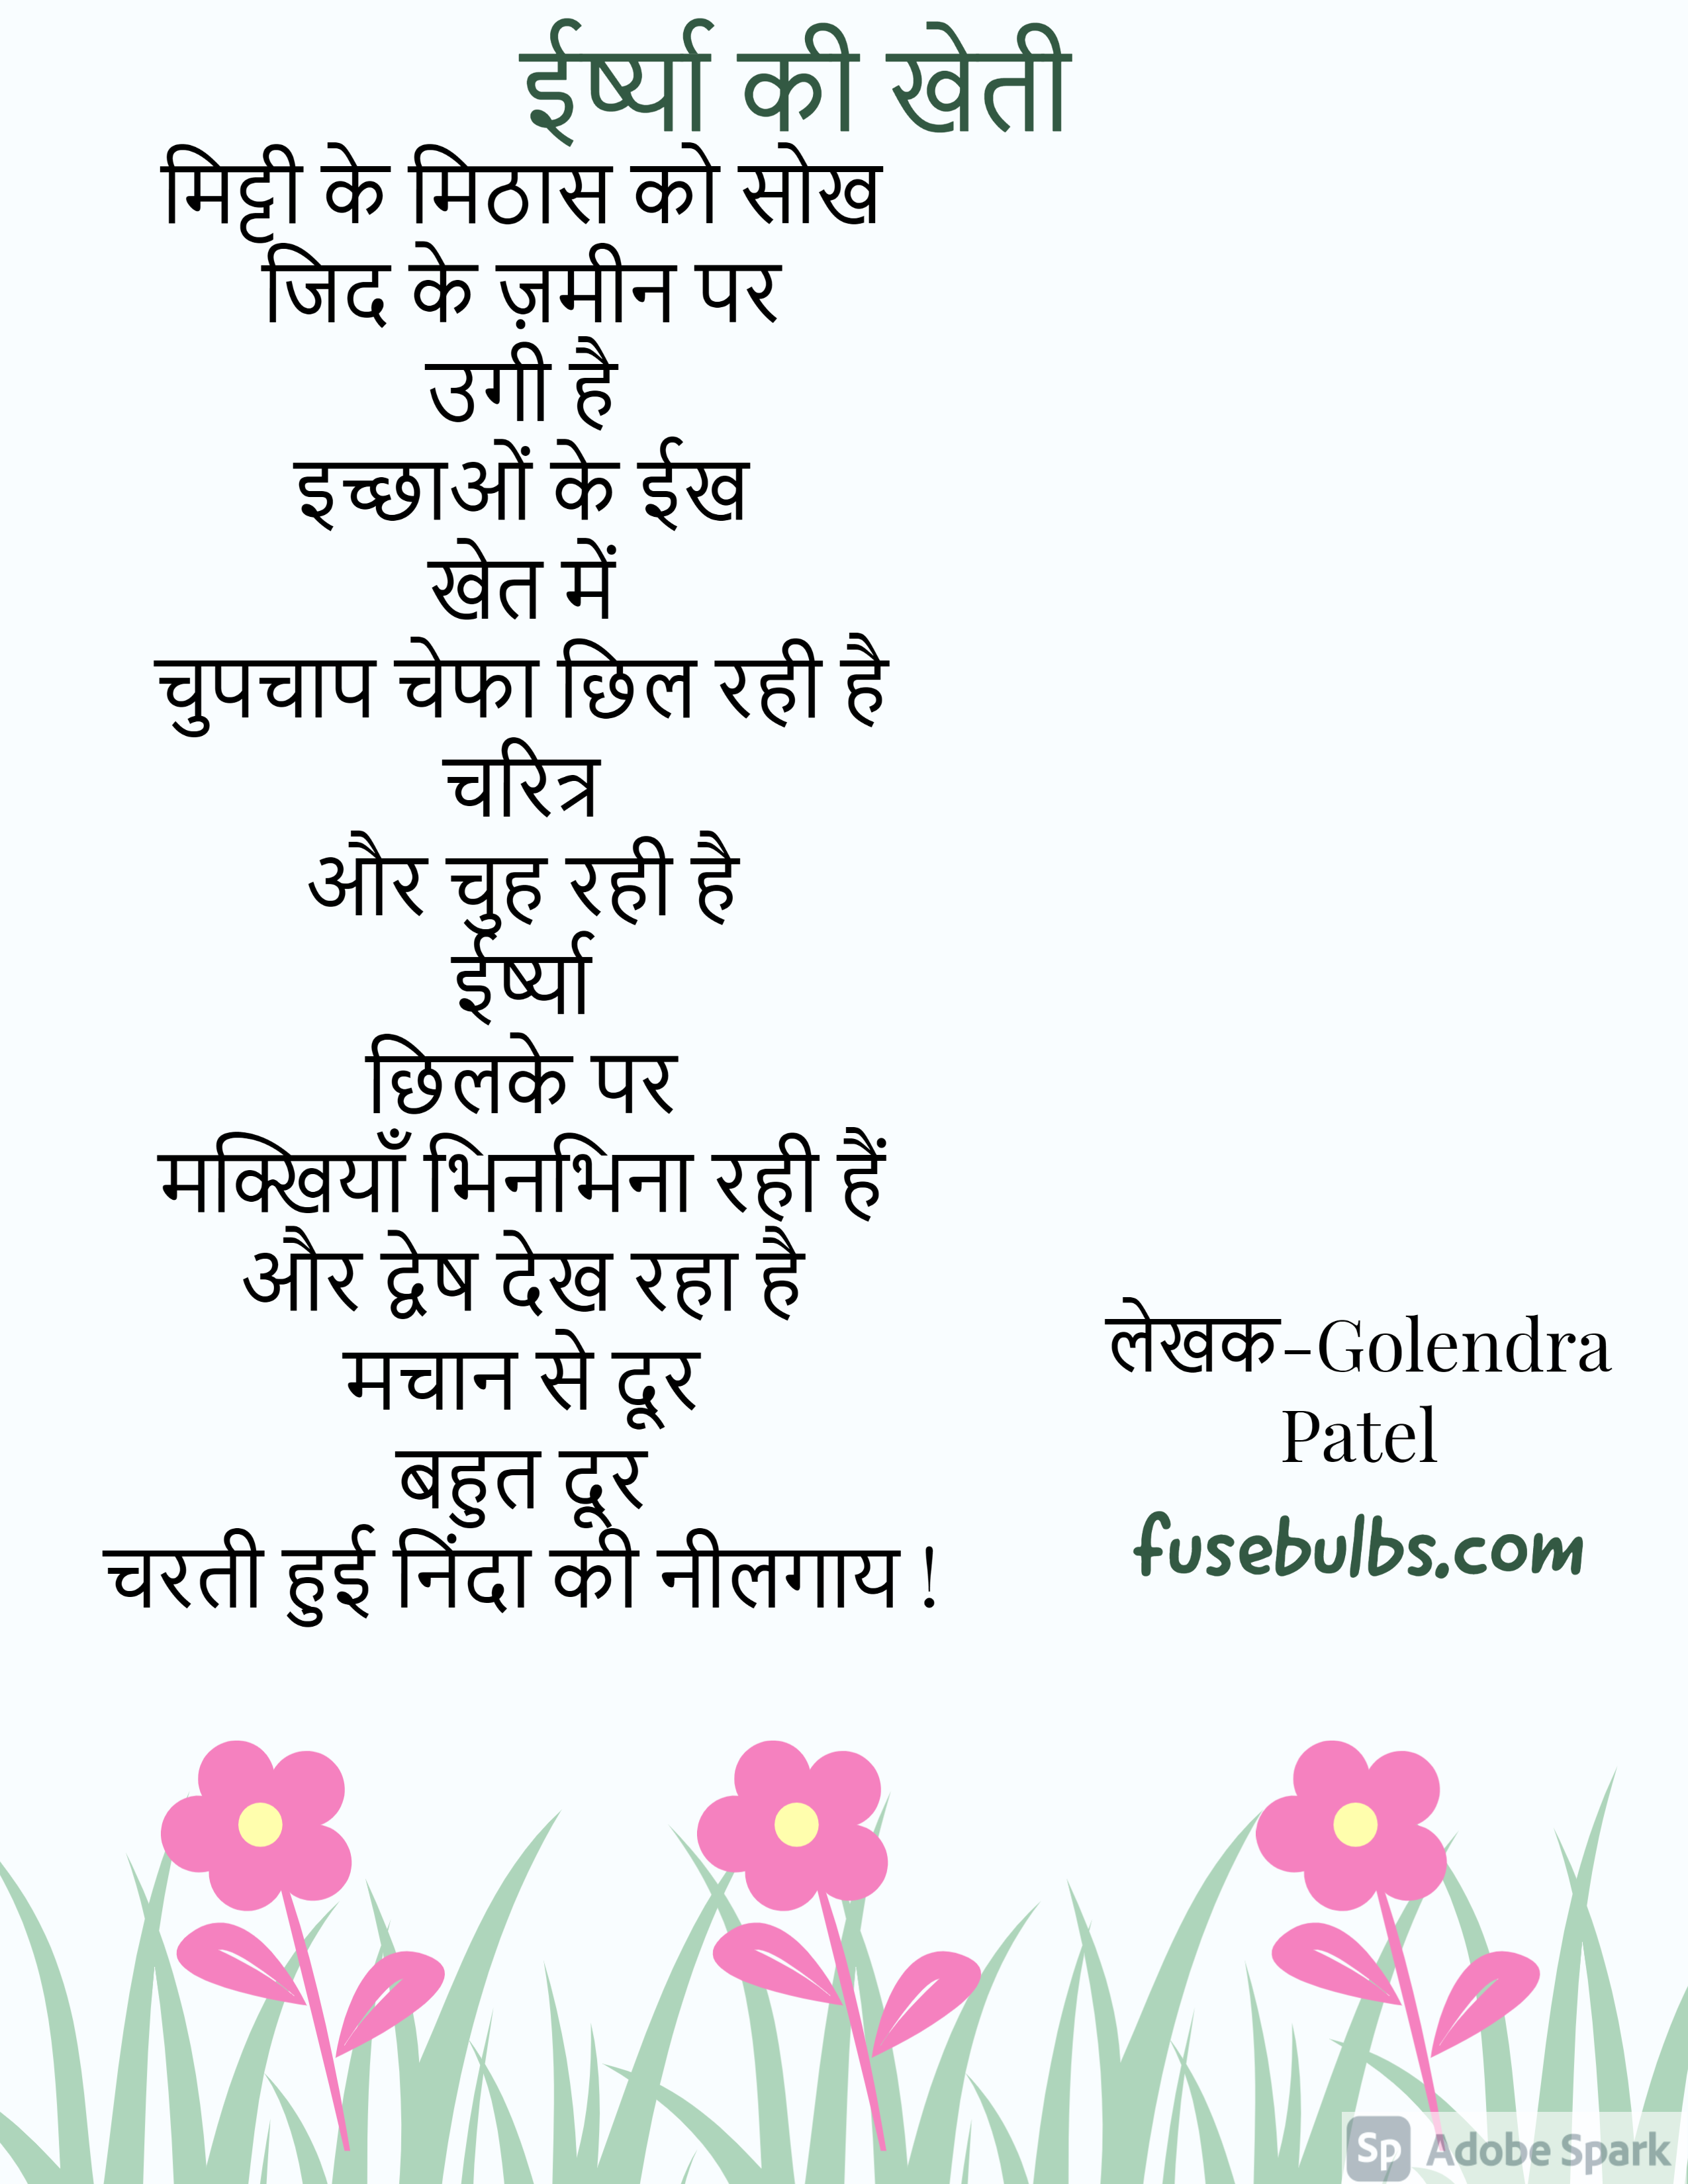 Hindi poem